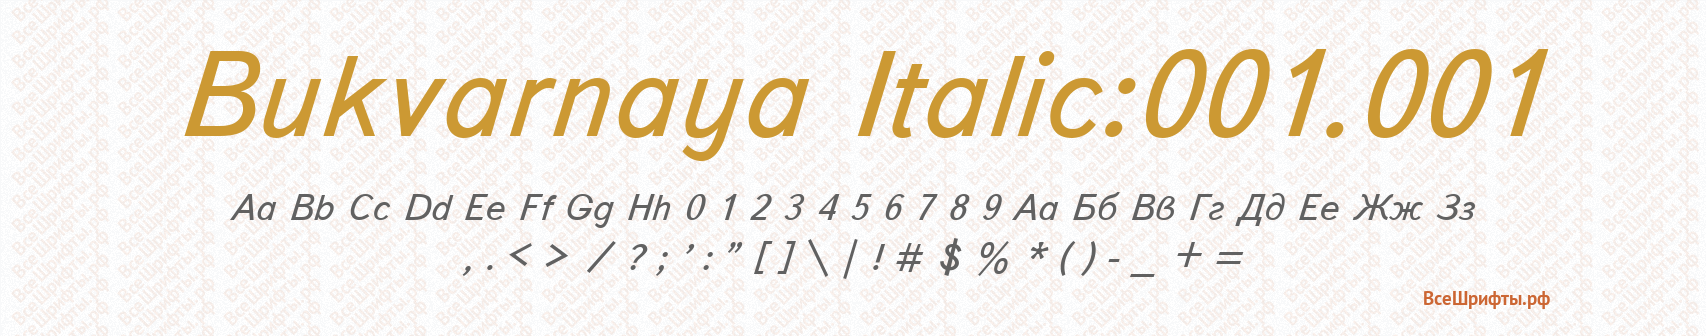 Шрифт Bukvarnaya Italic:001.001